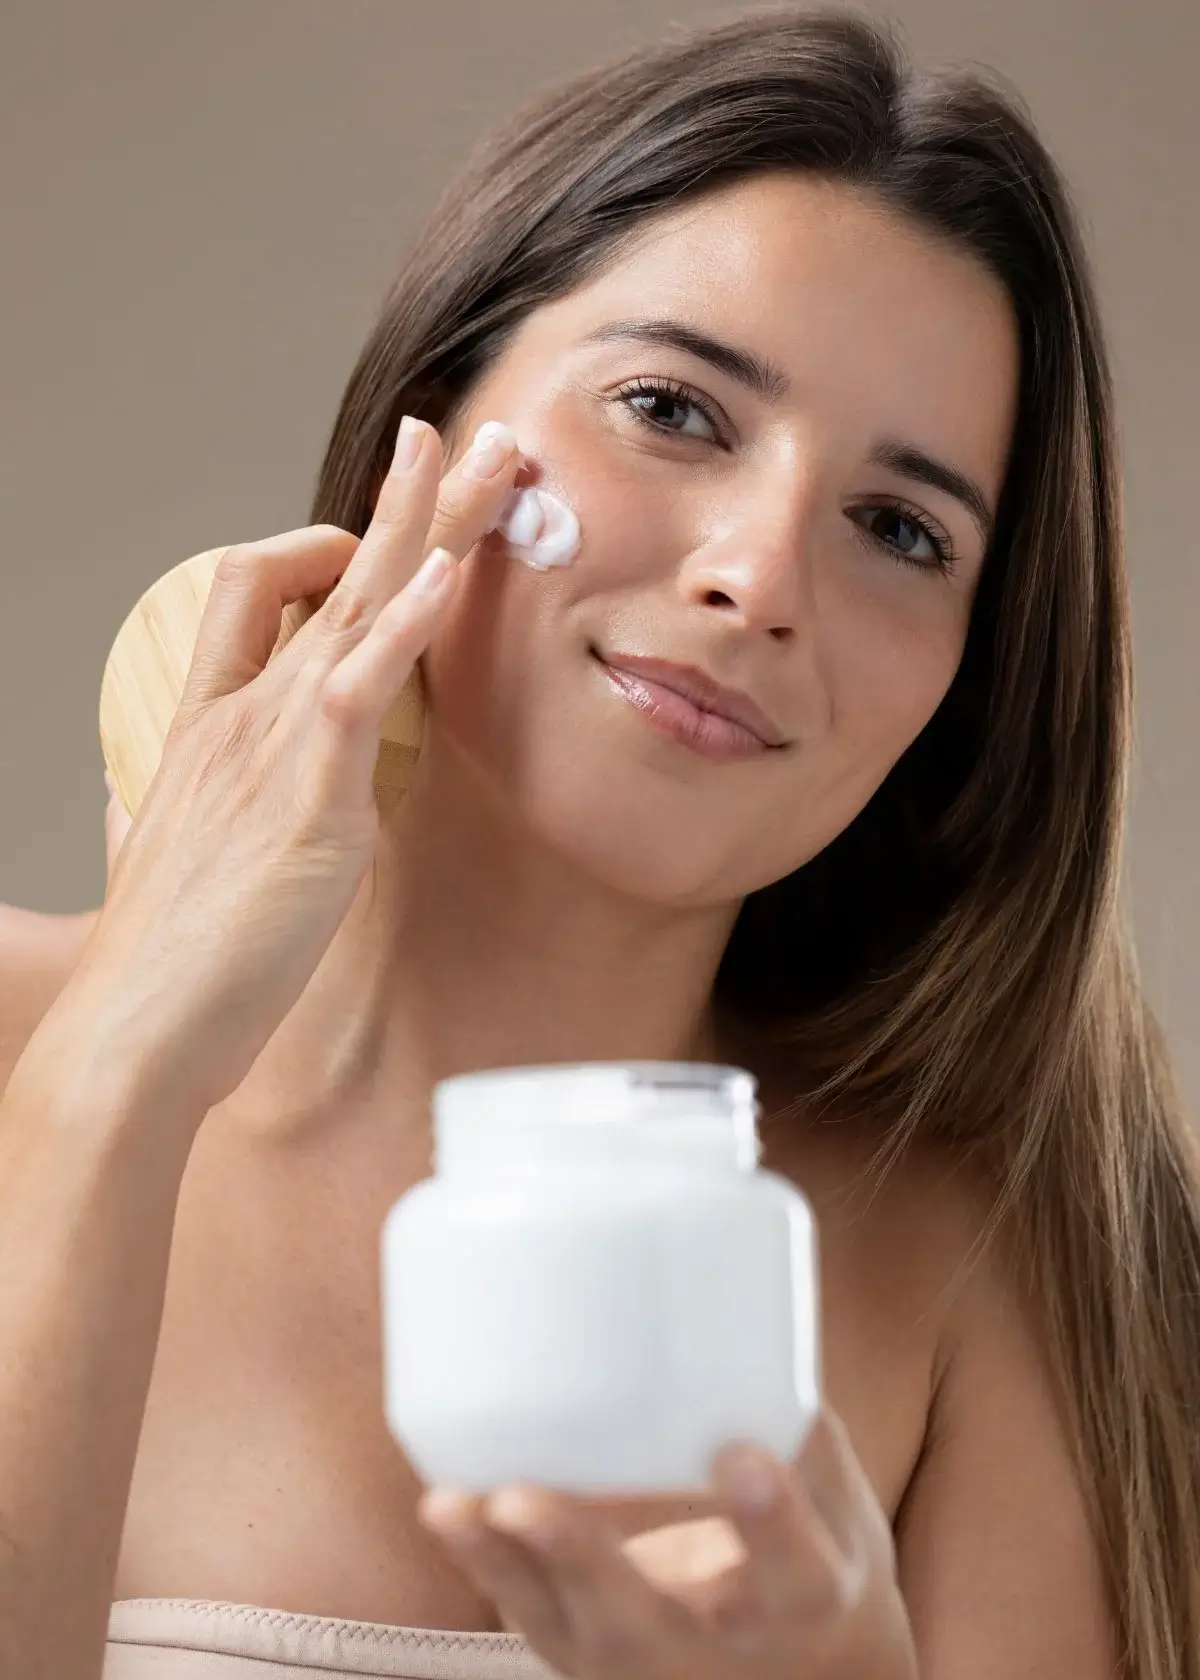 Can I use a face scrub if I have acne-prone skin?